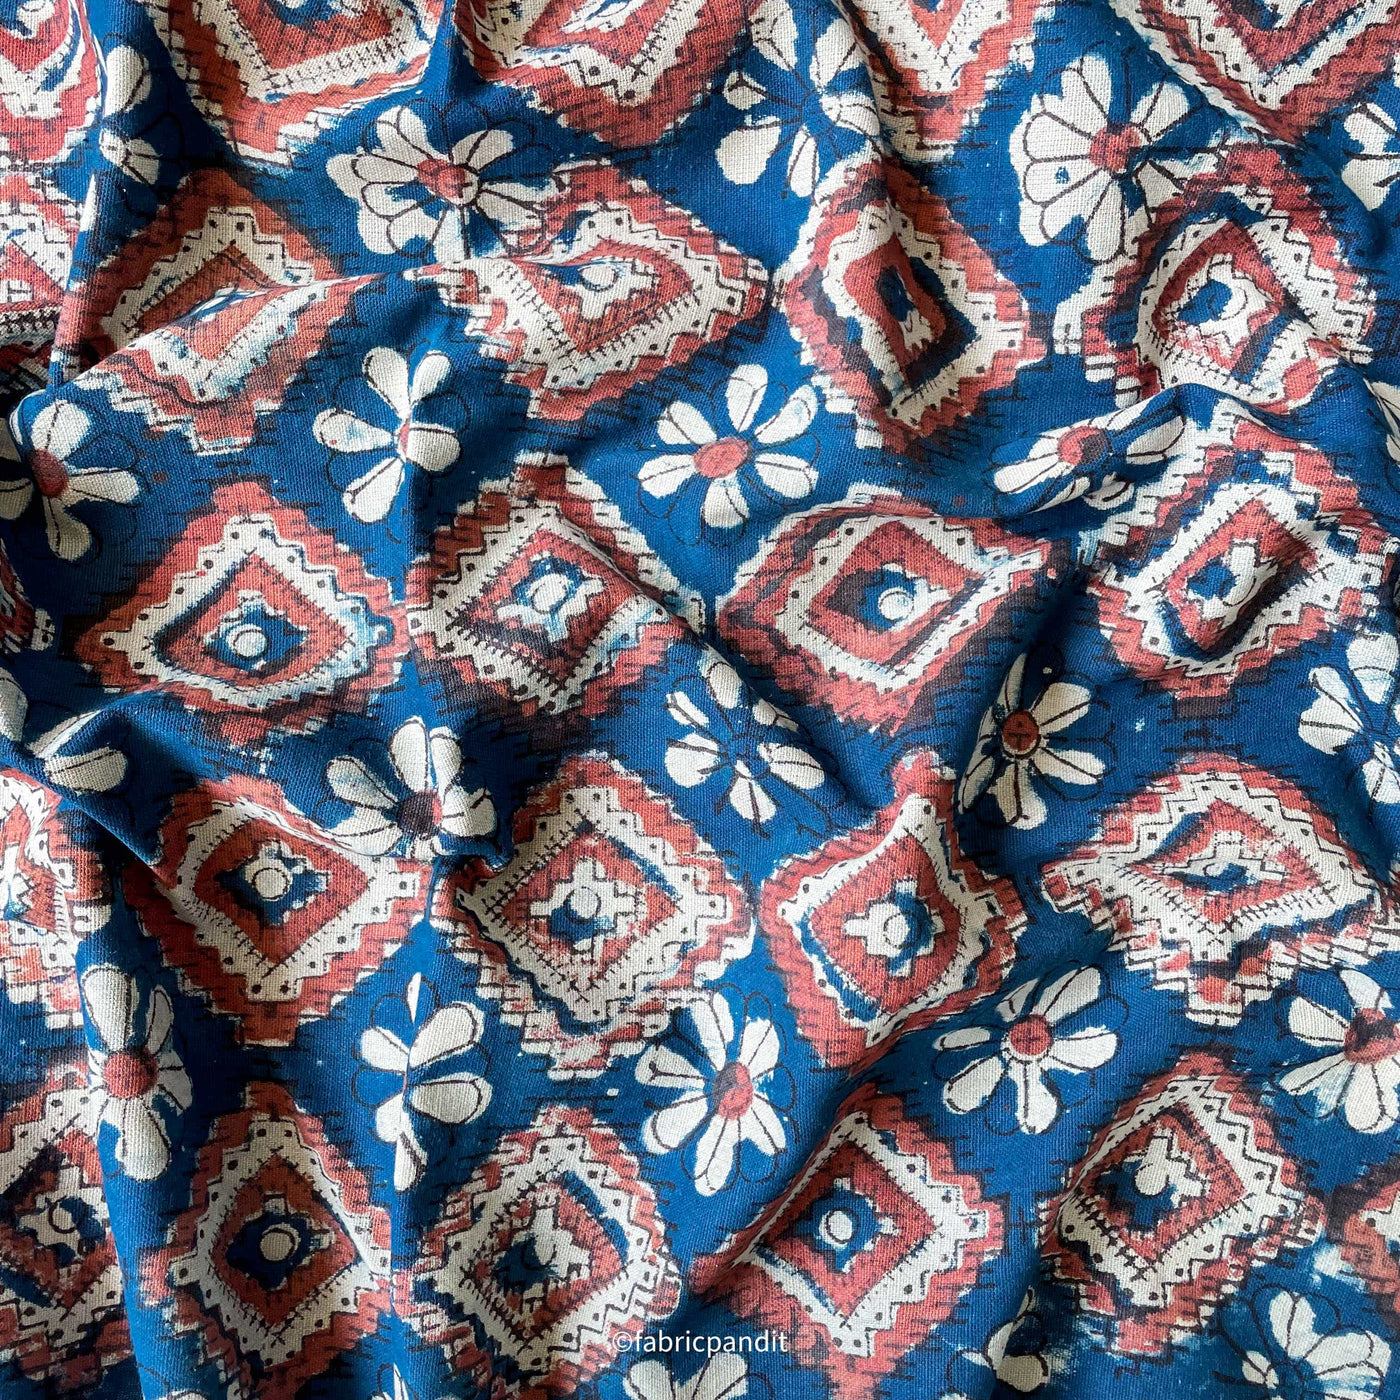 Printed Cotton Linen Fabric Cut Piece (CUT PIECE) Indigo Blue & Red Geometric & Floral Hand Block Printed Pure Cotton Linen Fabric (Width 42 inches)